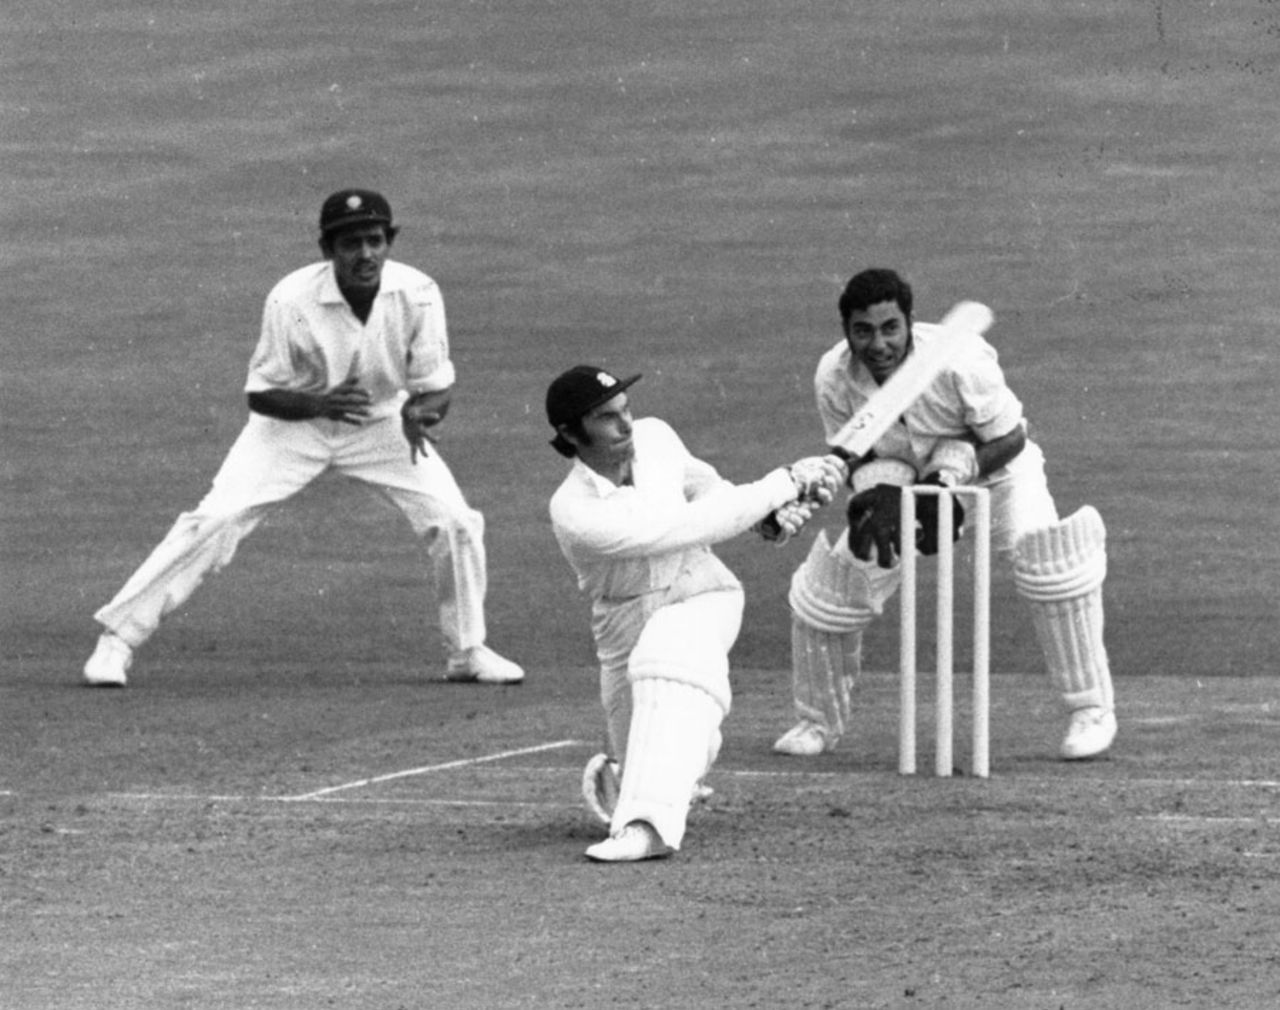 Alan Knott bats, England v India, third Test, The Oval, August 19, 1971